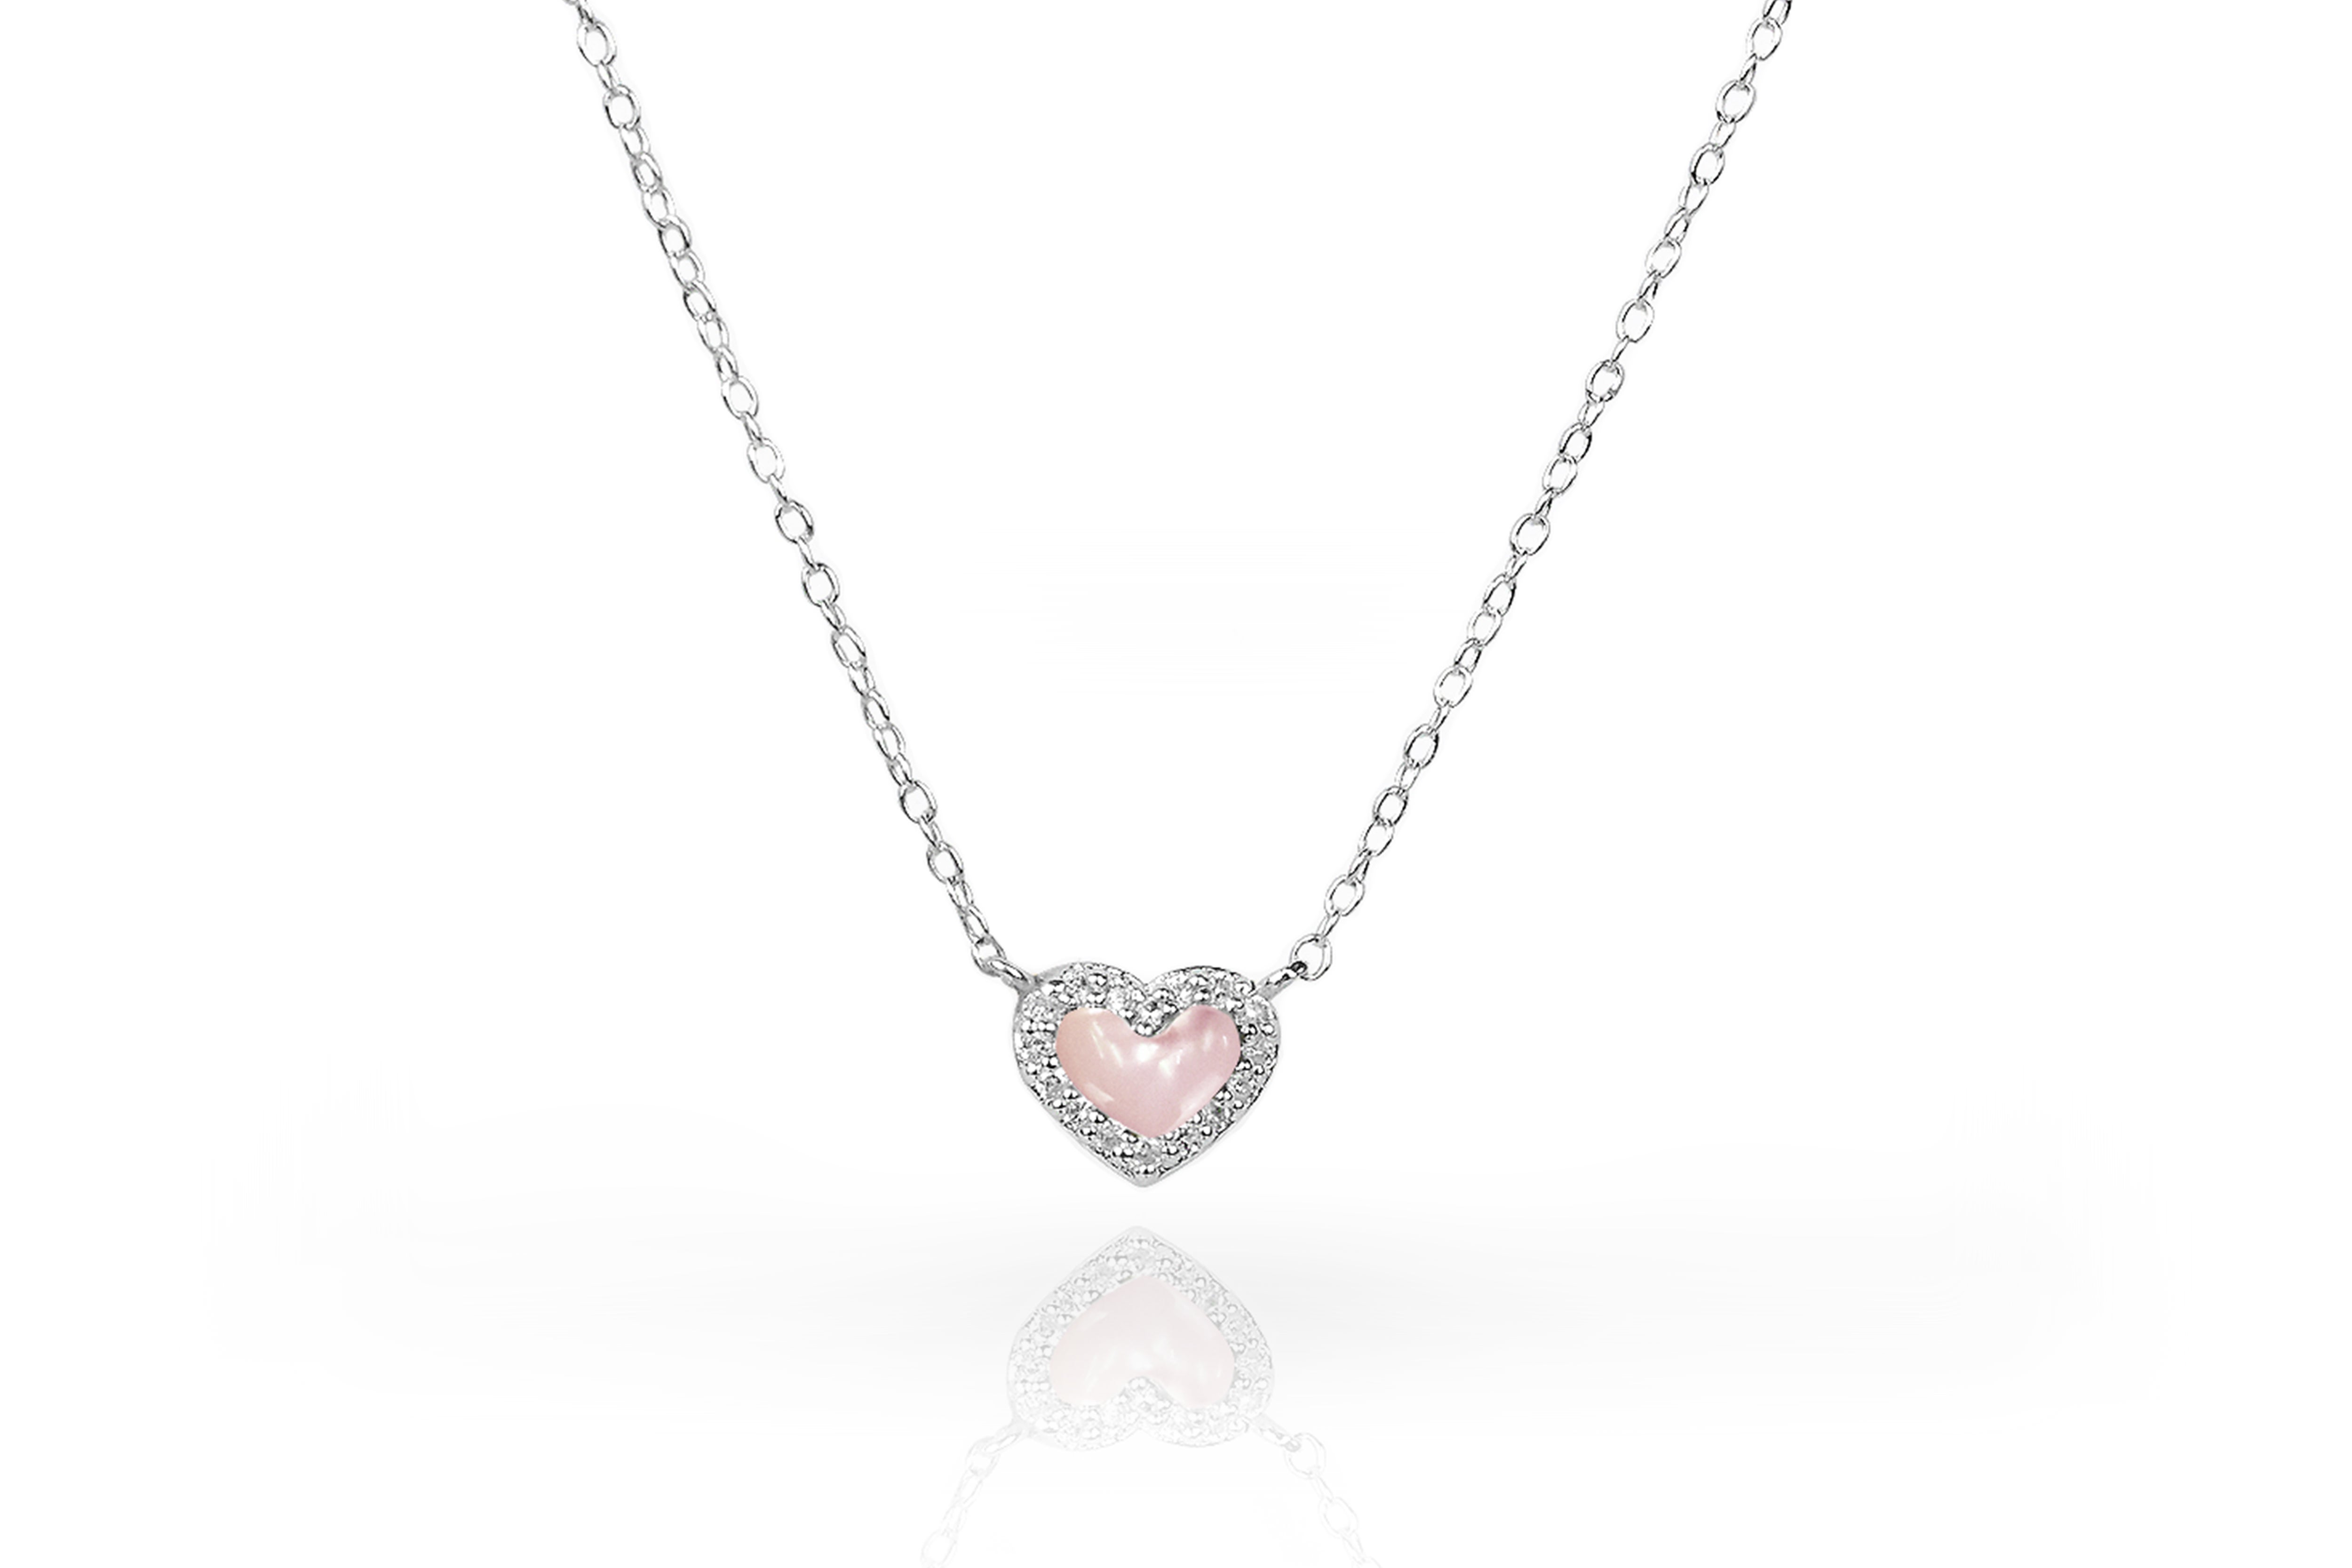 14k Gold Gemstone Heart Necklace, Gemstone Options For Sale